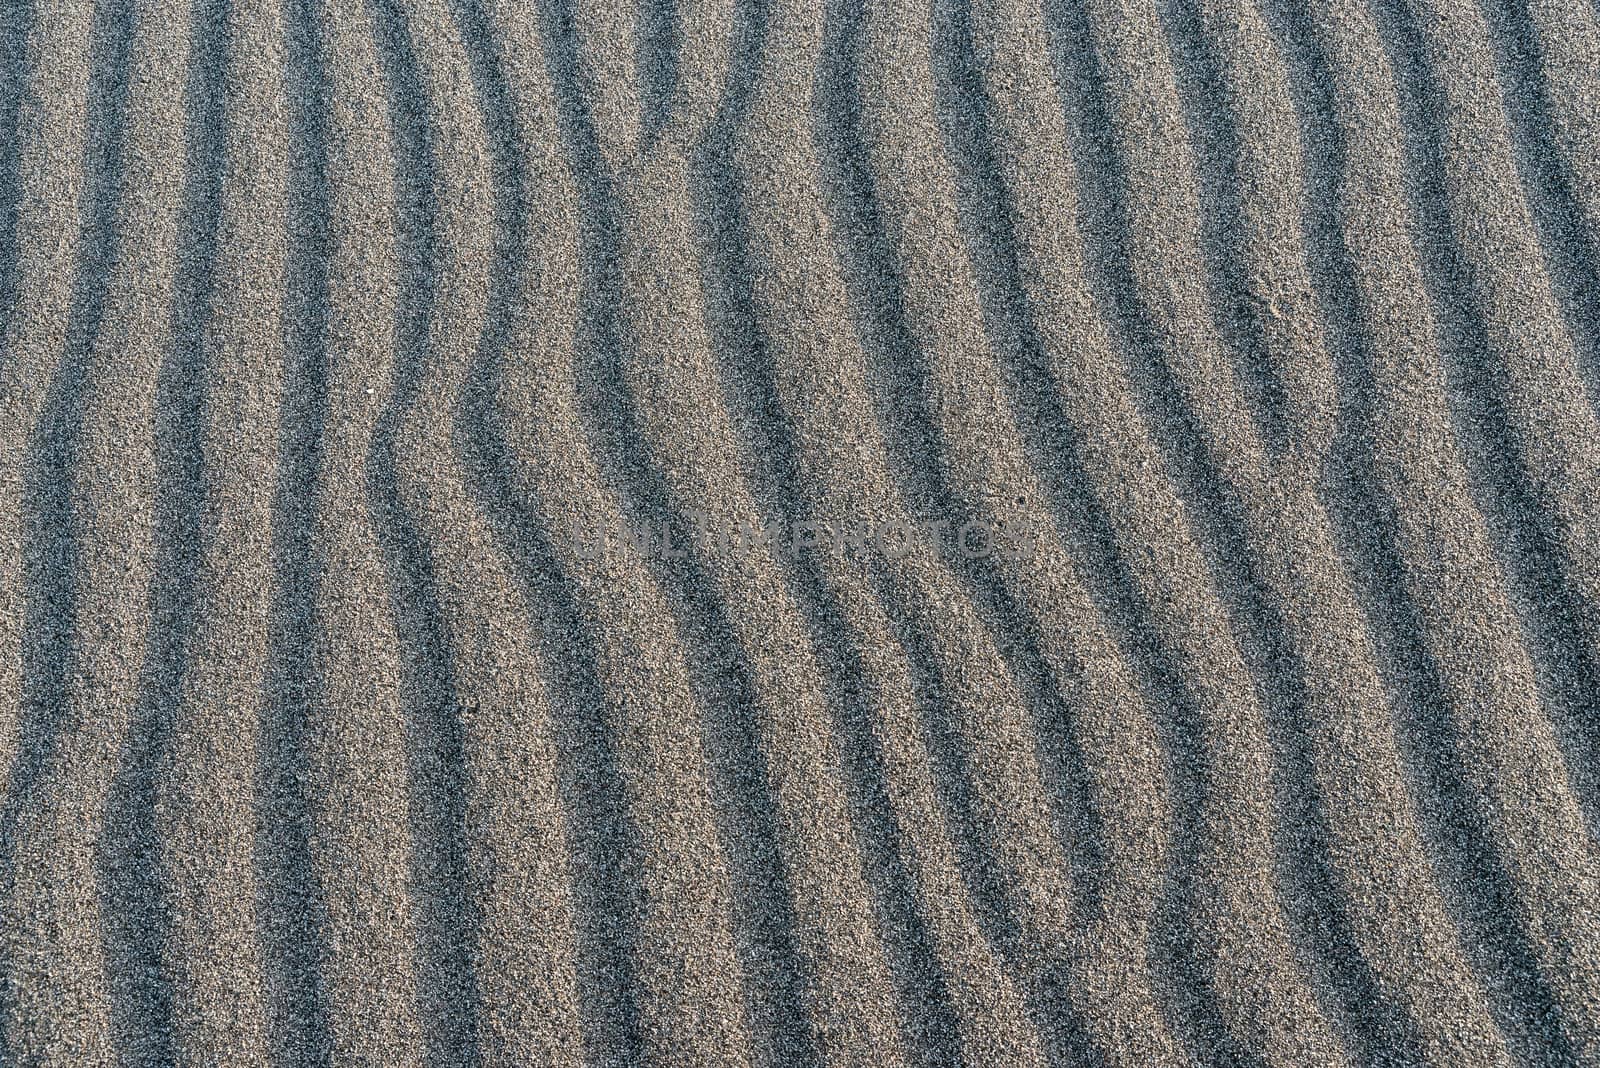 The rolling sands of Bruneau Dunes, Idaho.